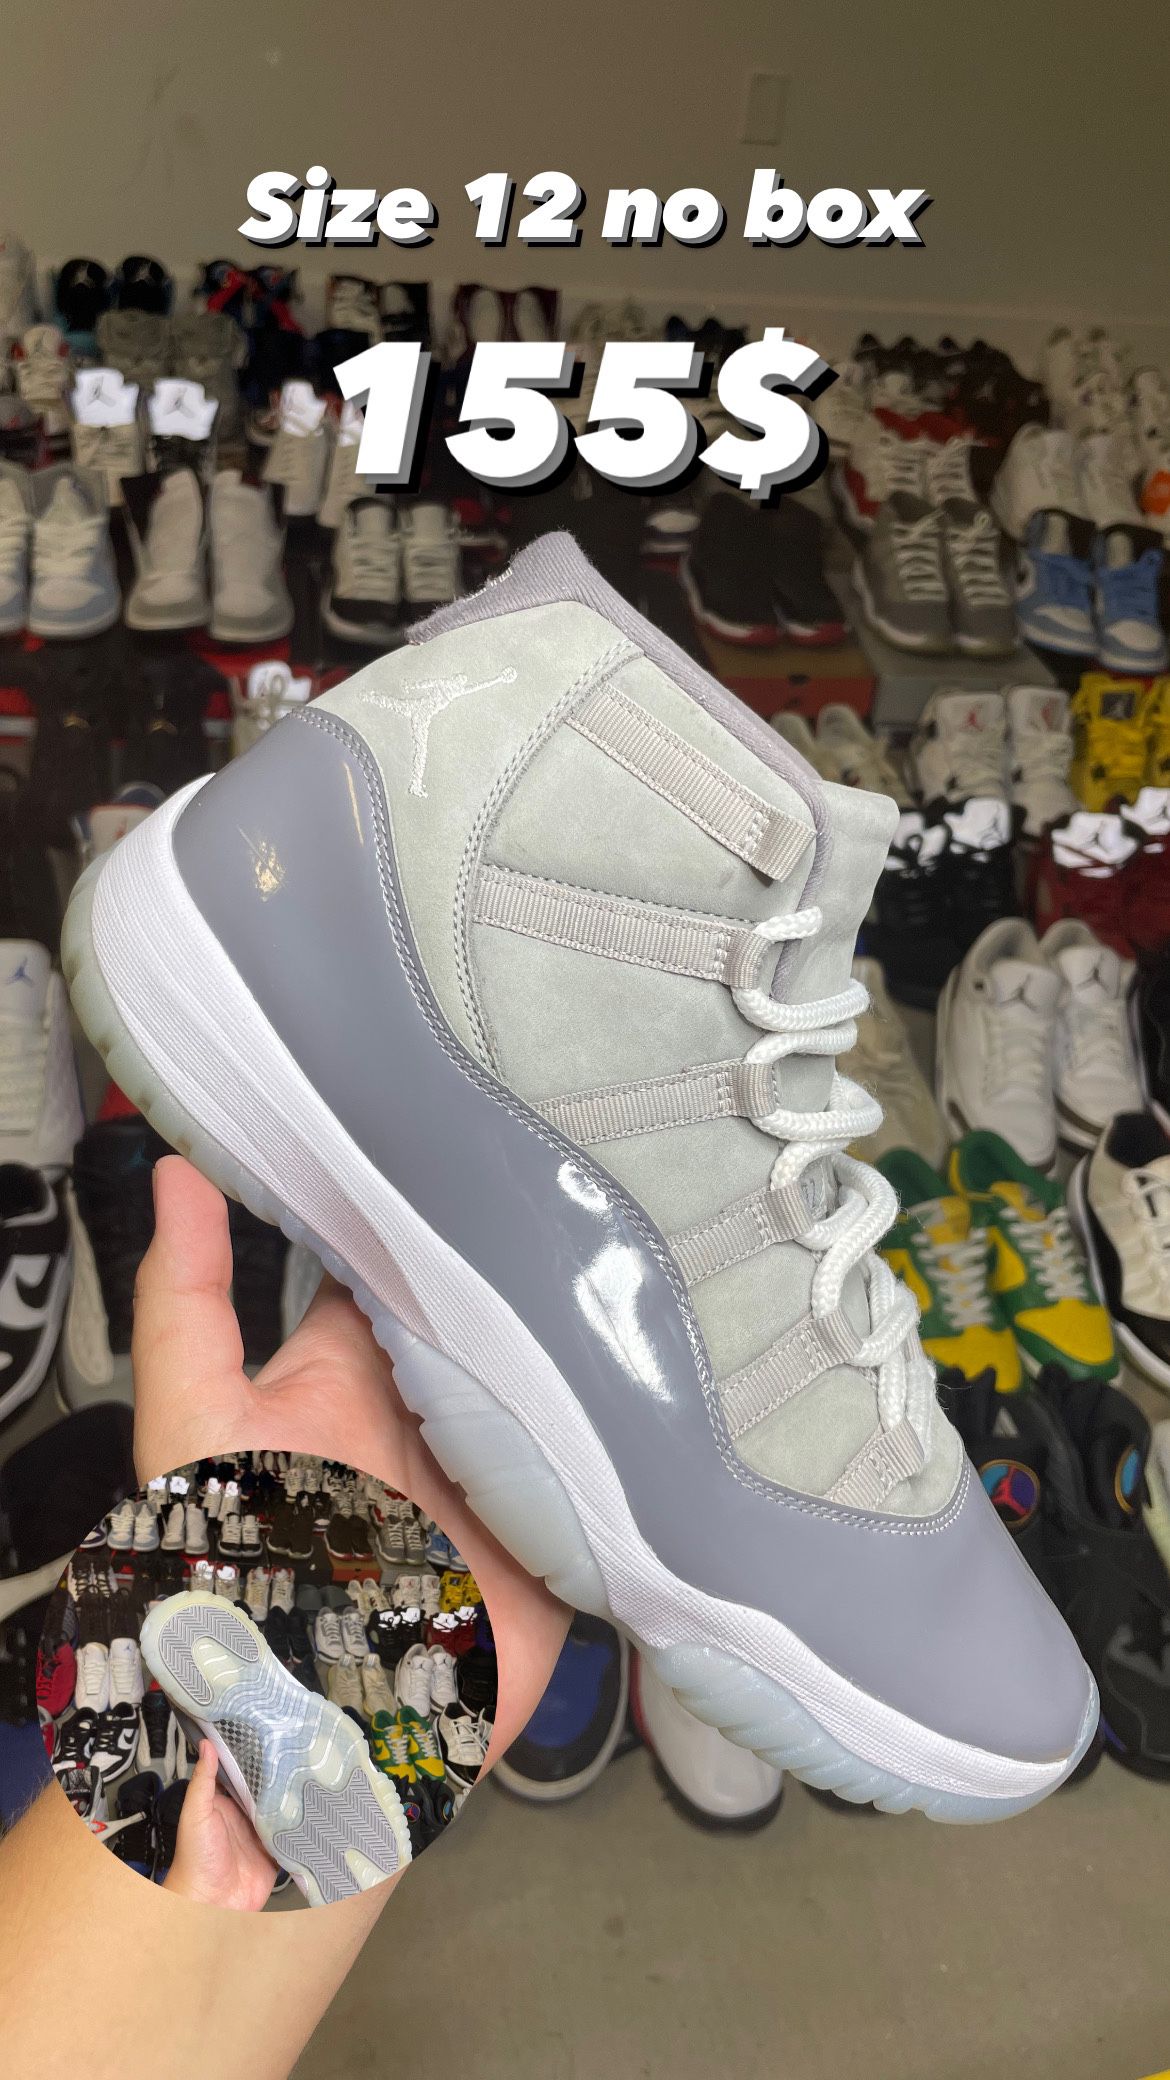 Jordan 11 Cool Grey Size 12 